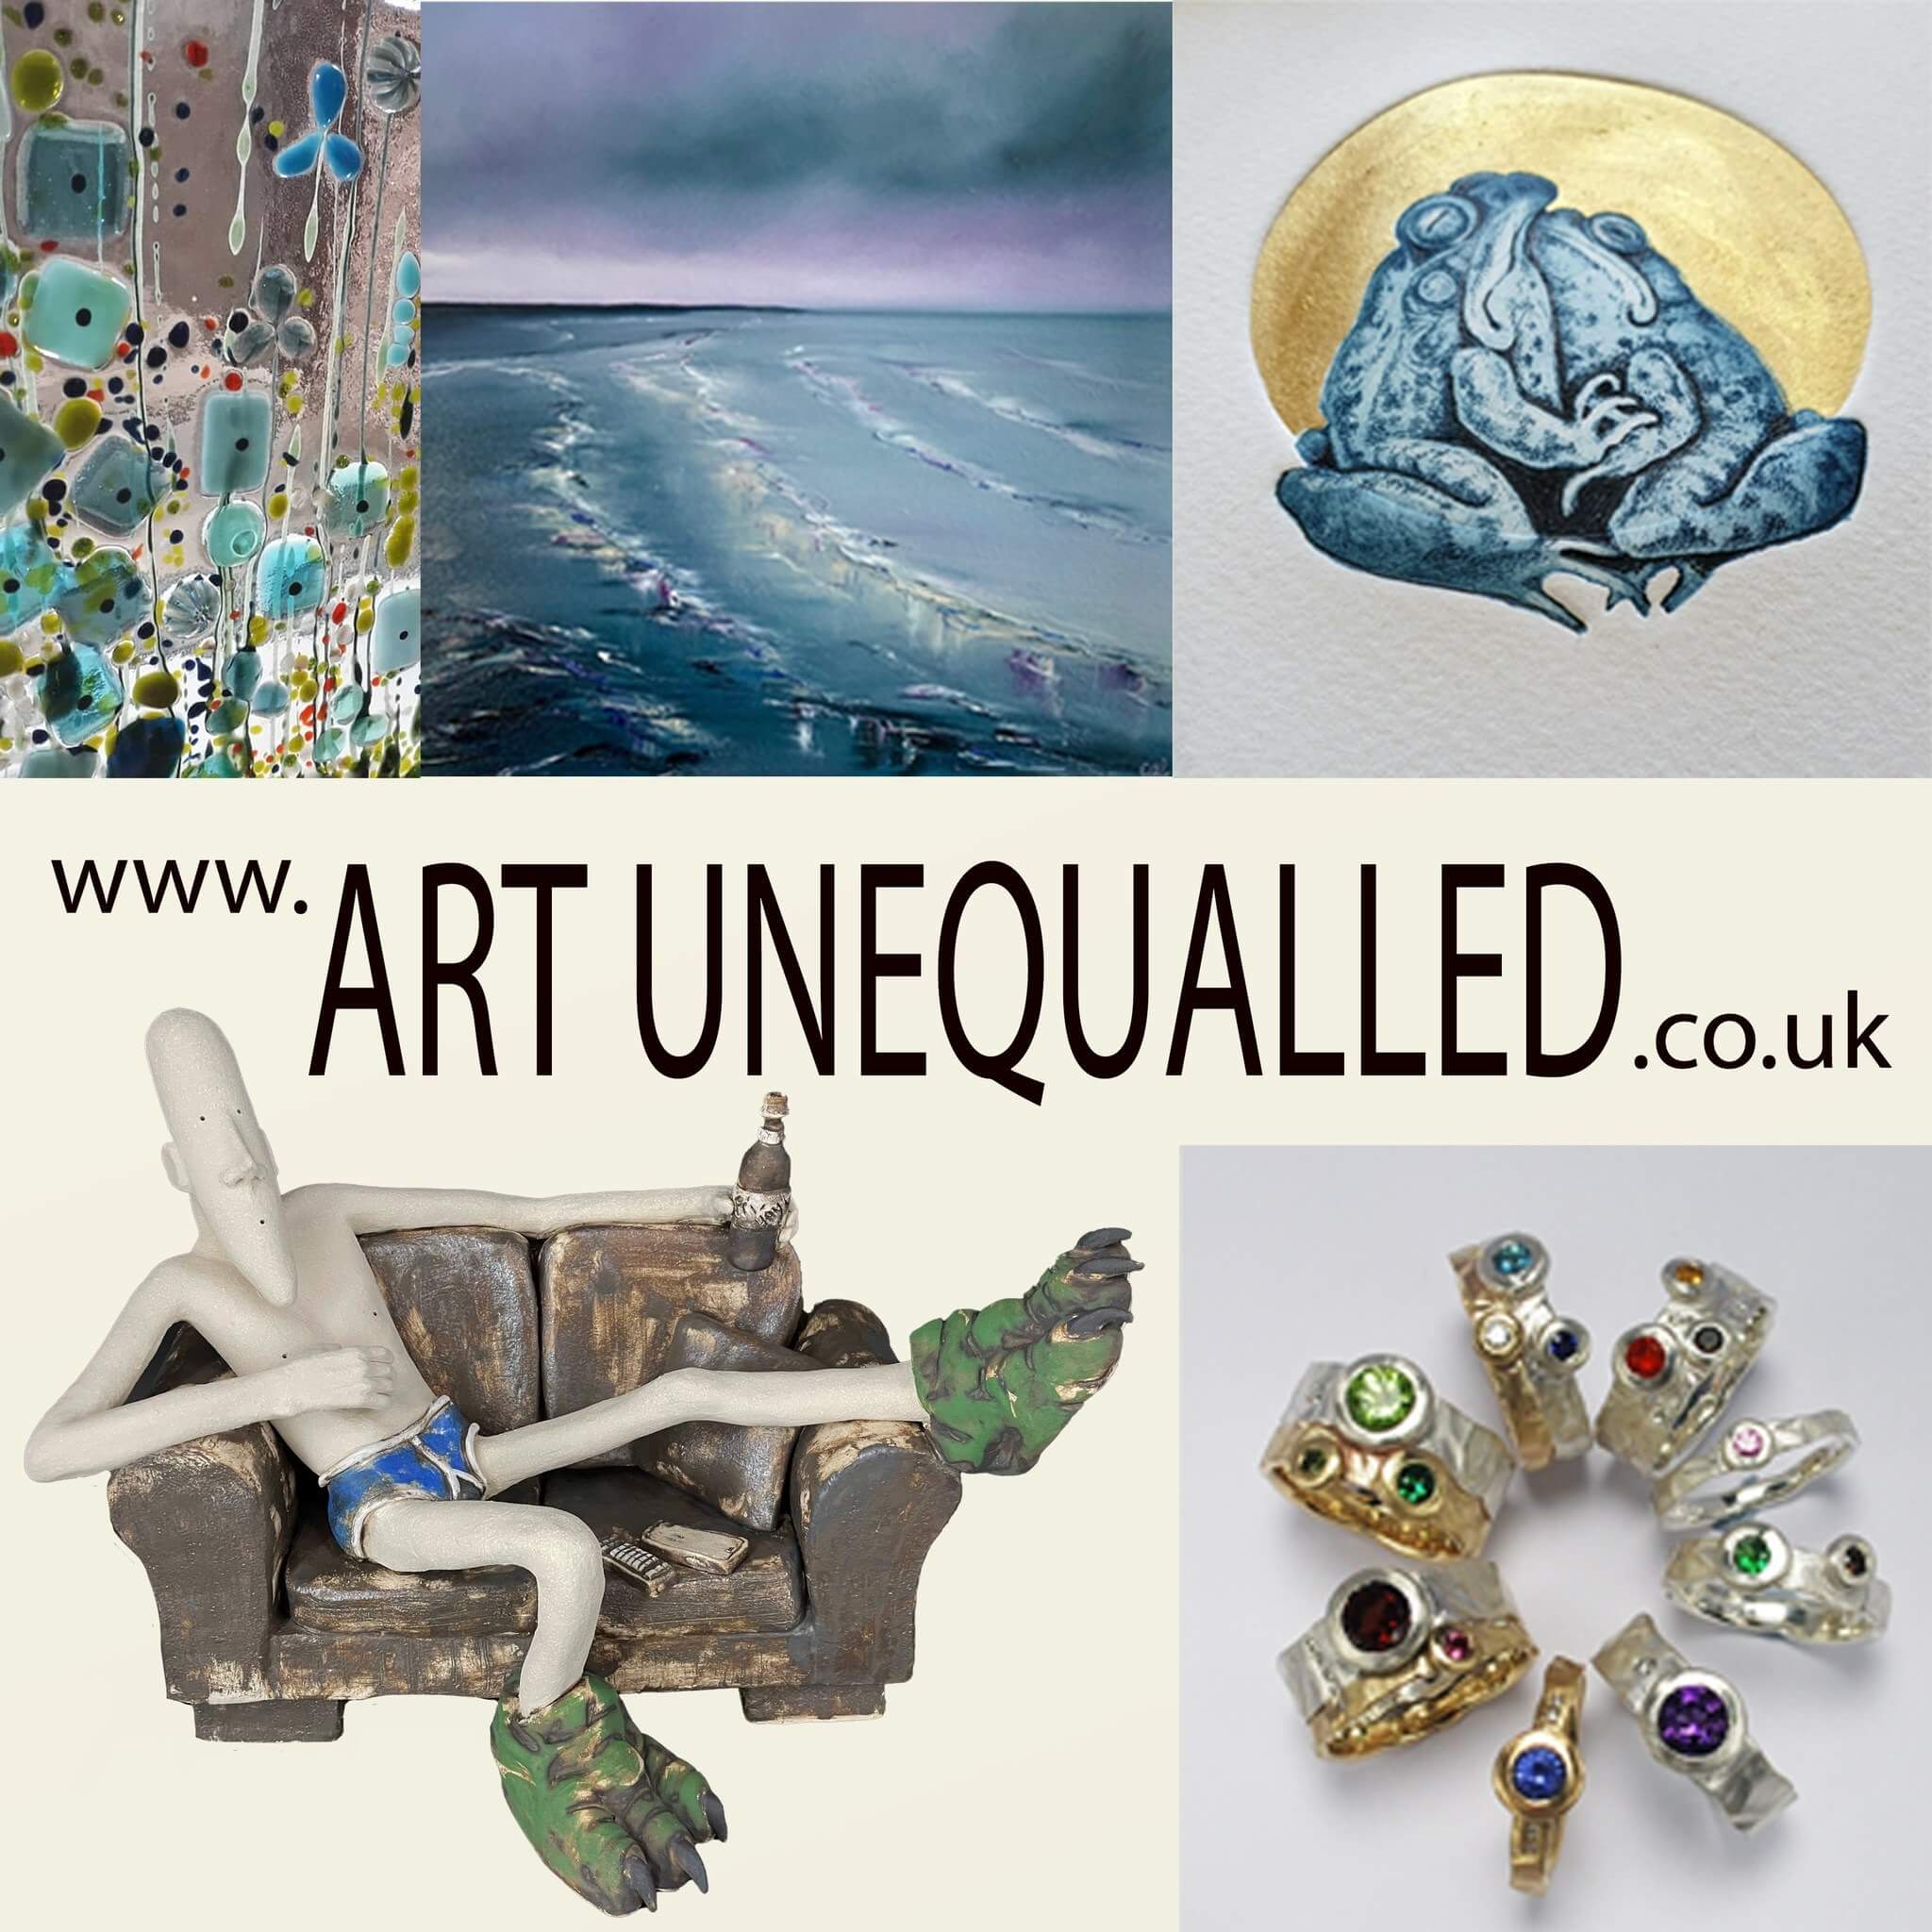 Art Unequaled Exhibition